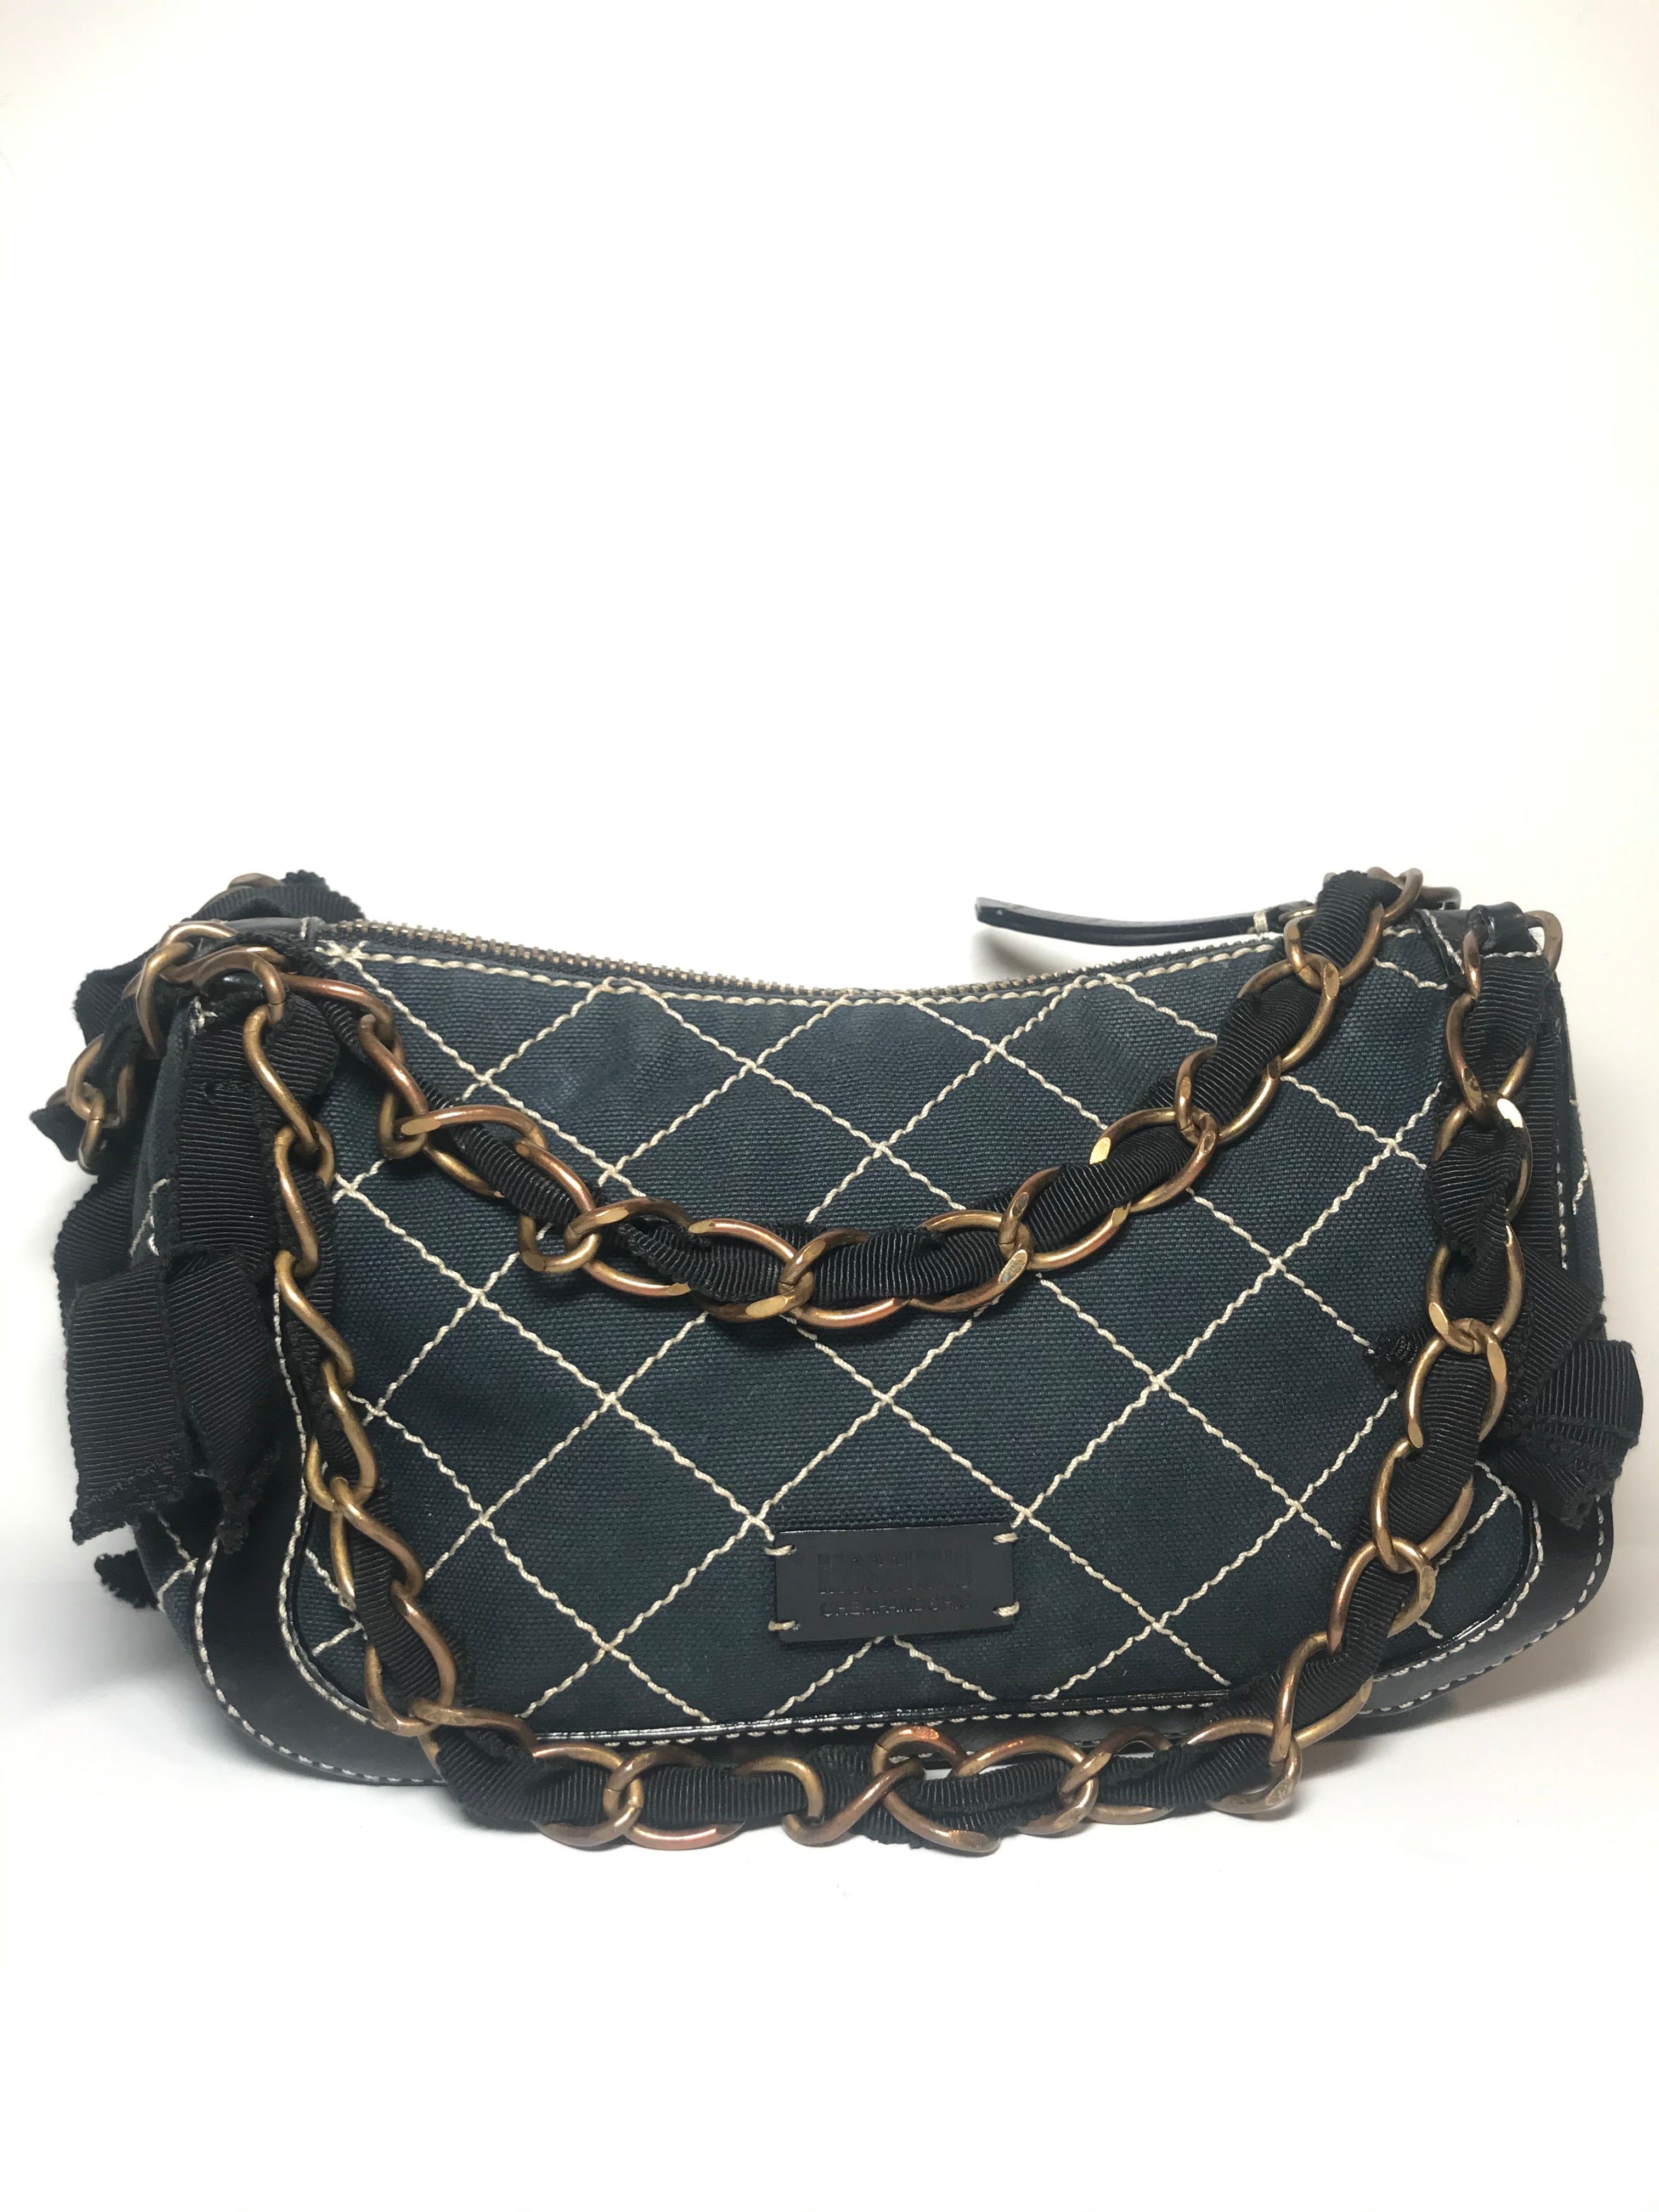 Moschino Vintage Leather Tweed Handbag